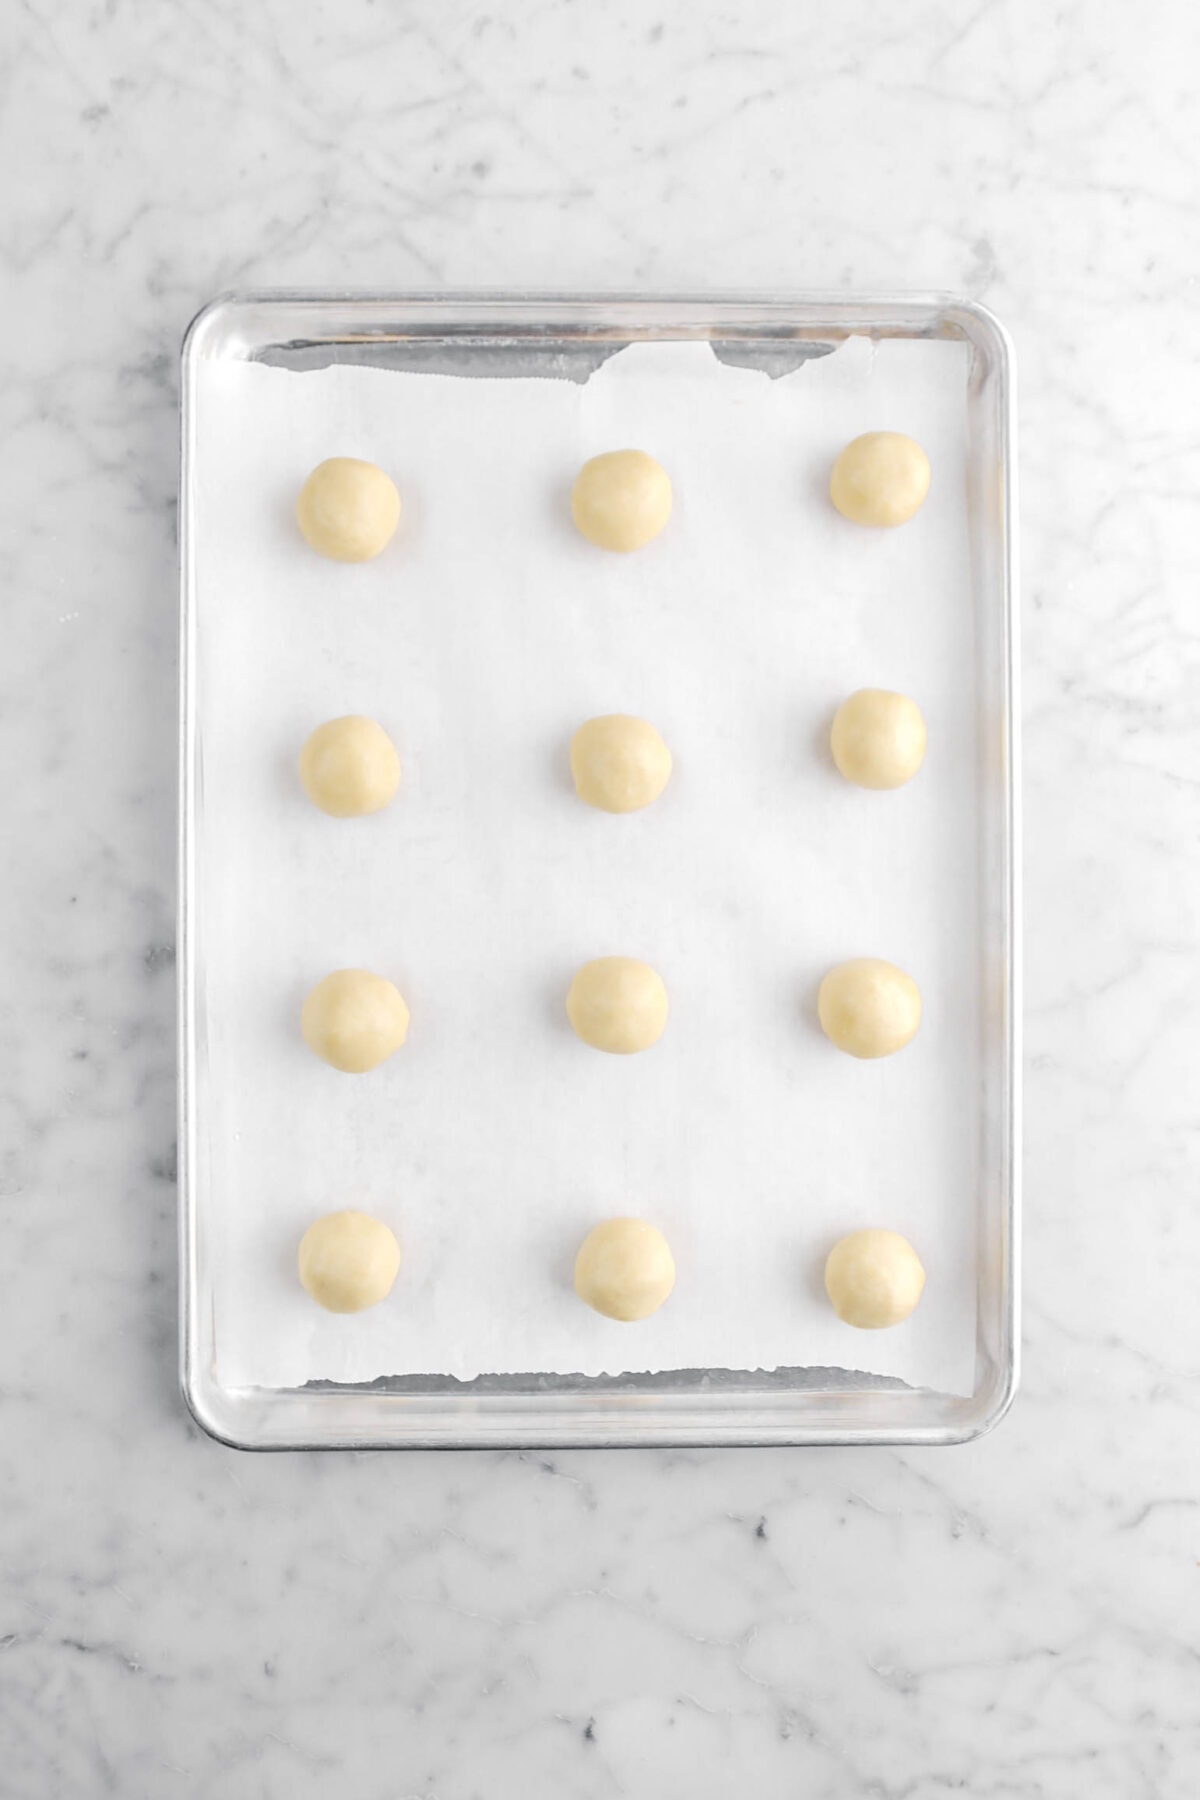 twelve cookie dough balls on lined sheet pan.